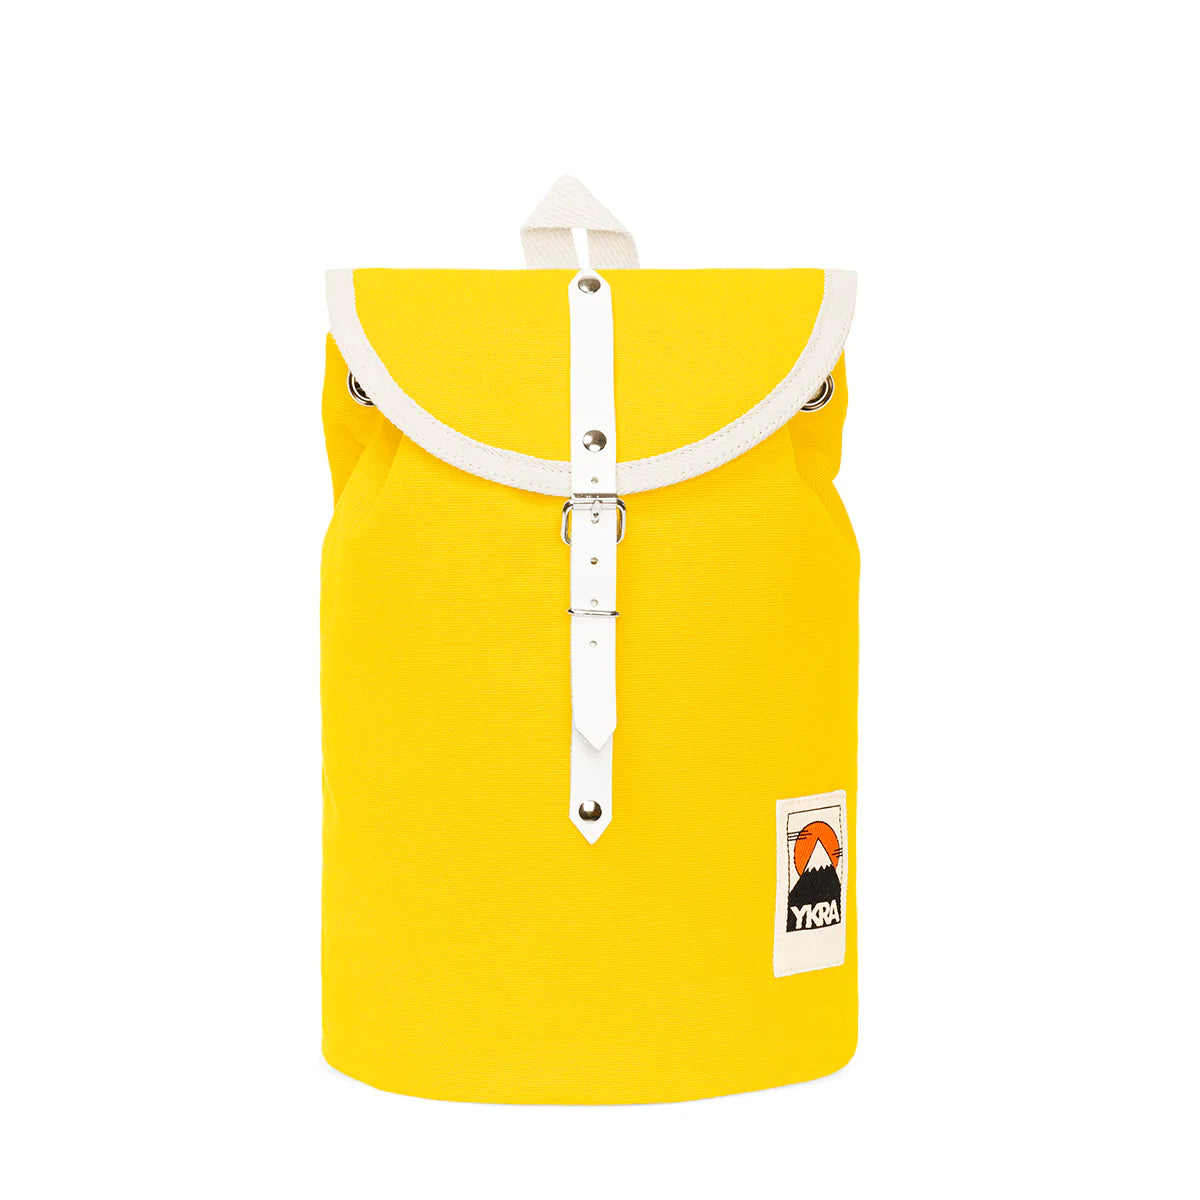 ykra backpack sailor mini - yellow